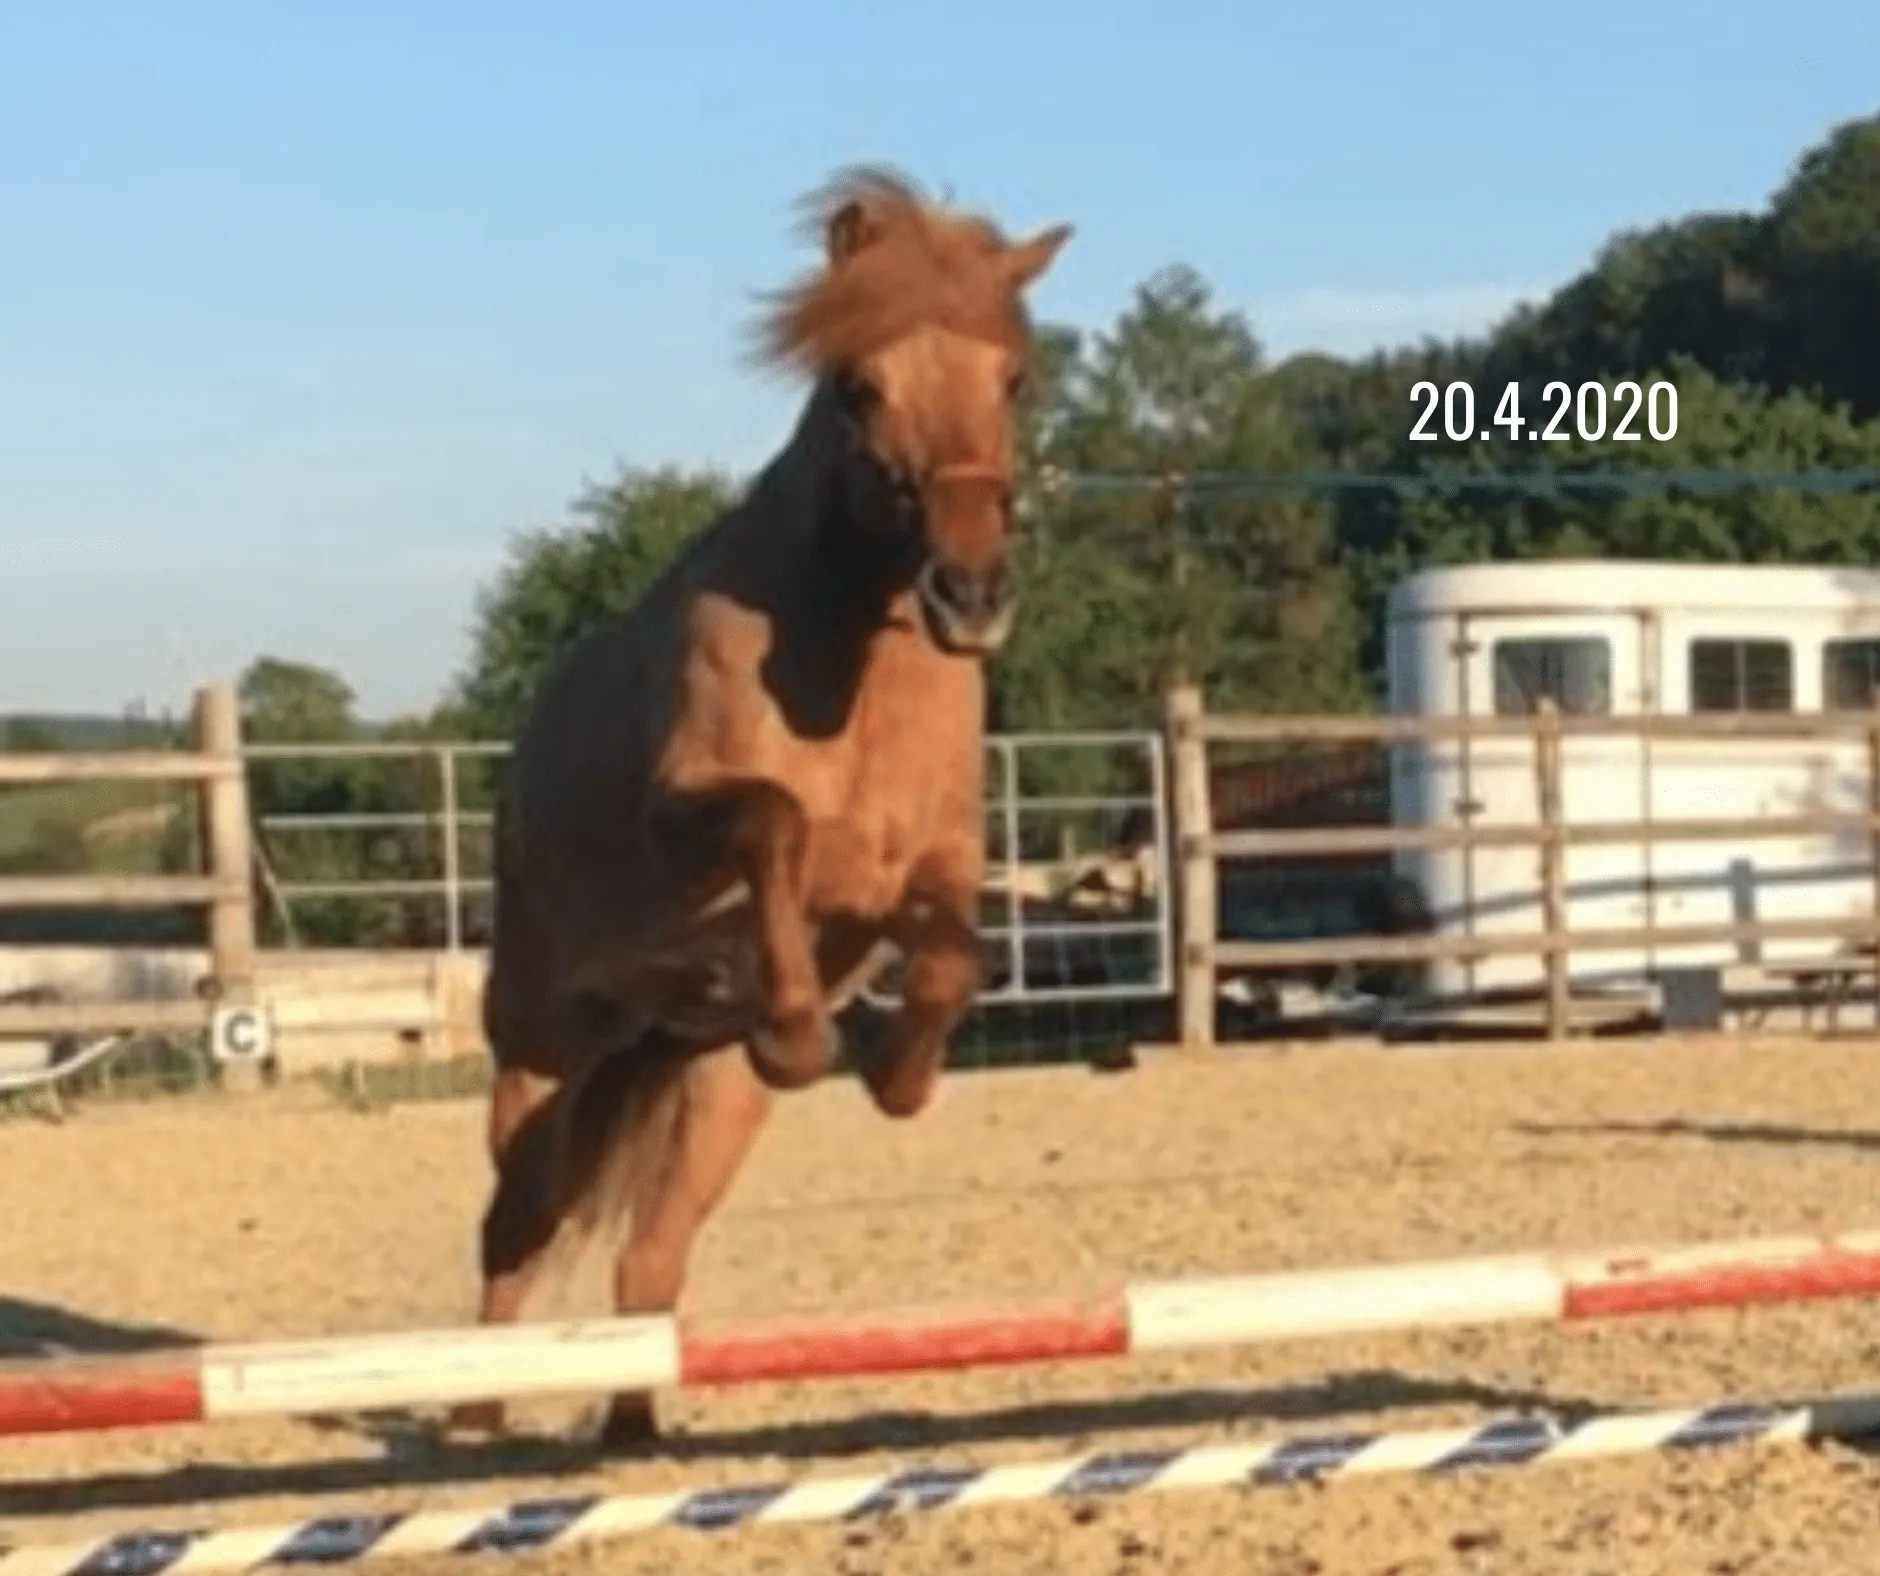 springendes Pony